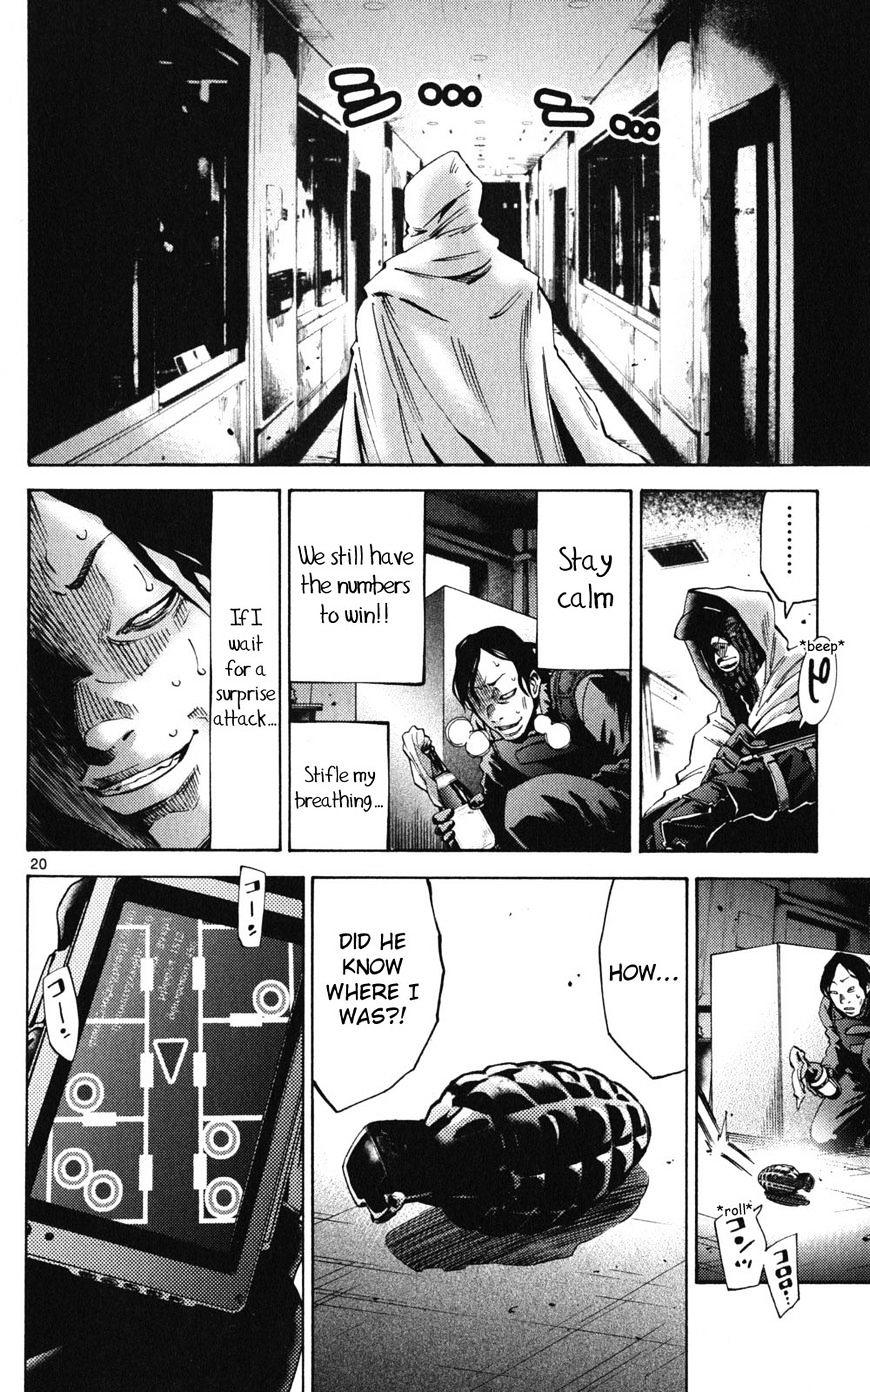 Imawa No Kuni No Alice Chapter 49.1 : Side Story 5 - King Of Spades (1) page 18 - Mangakakalot